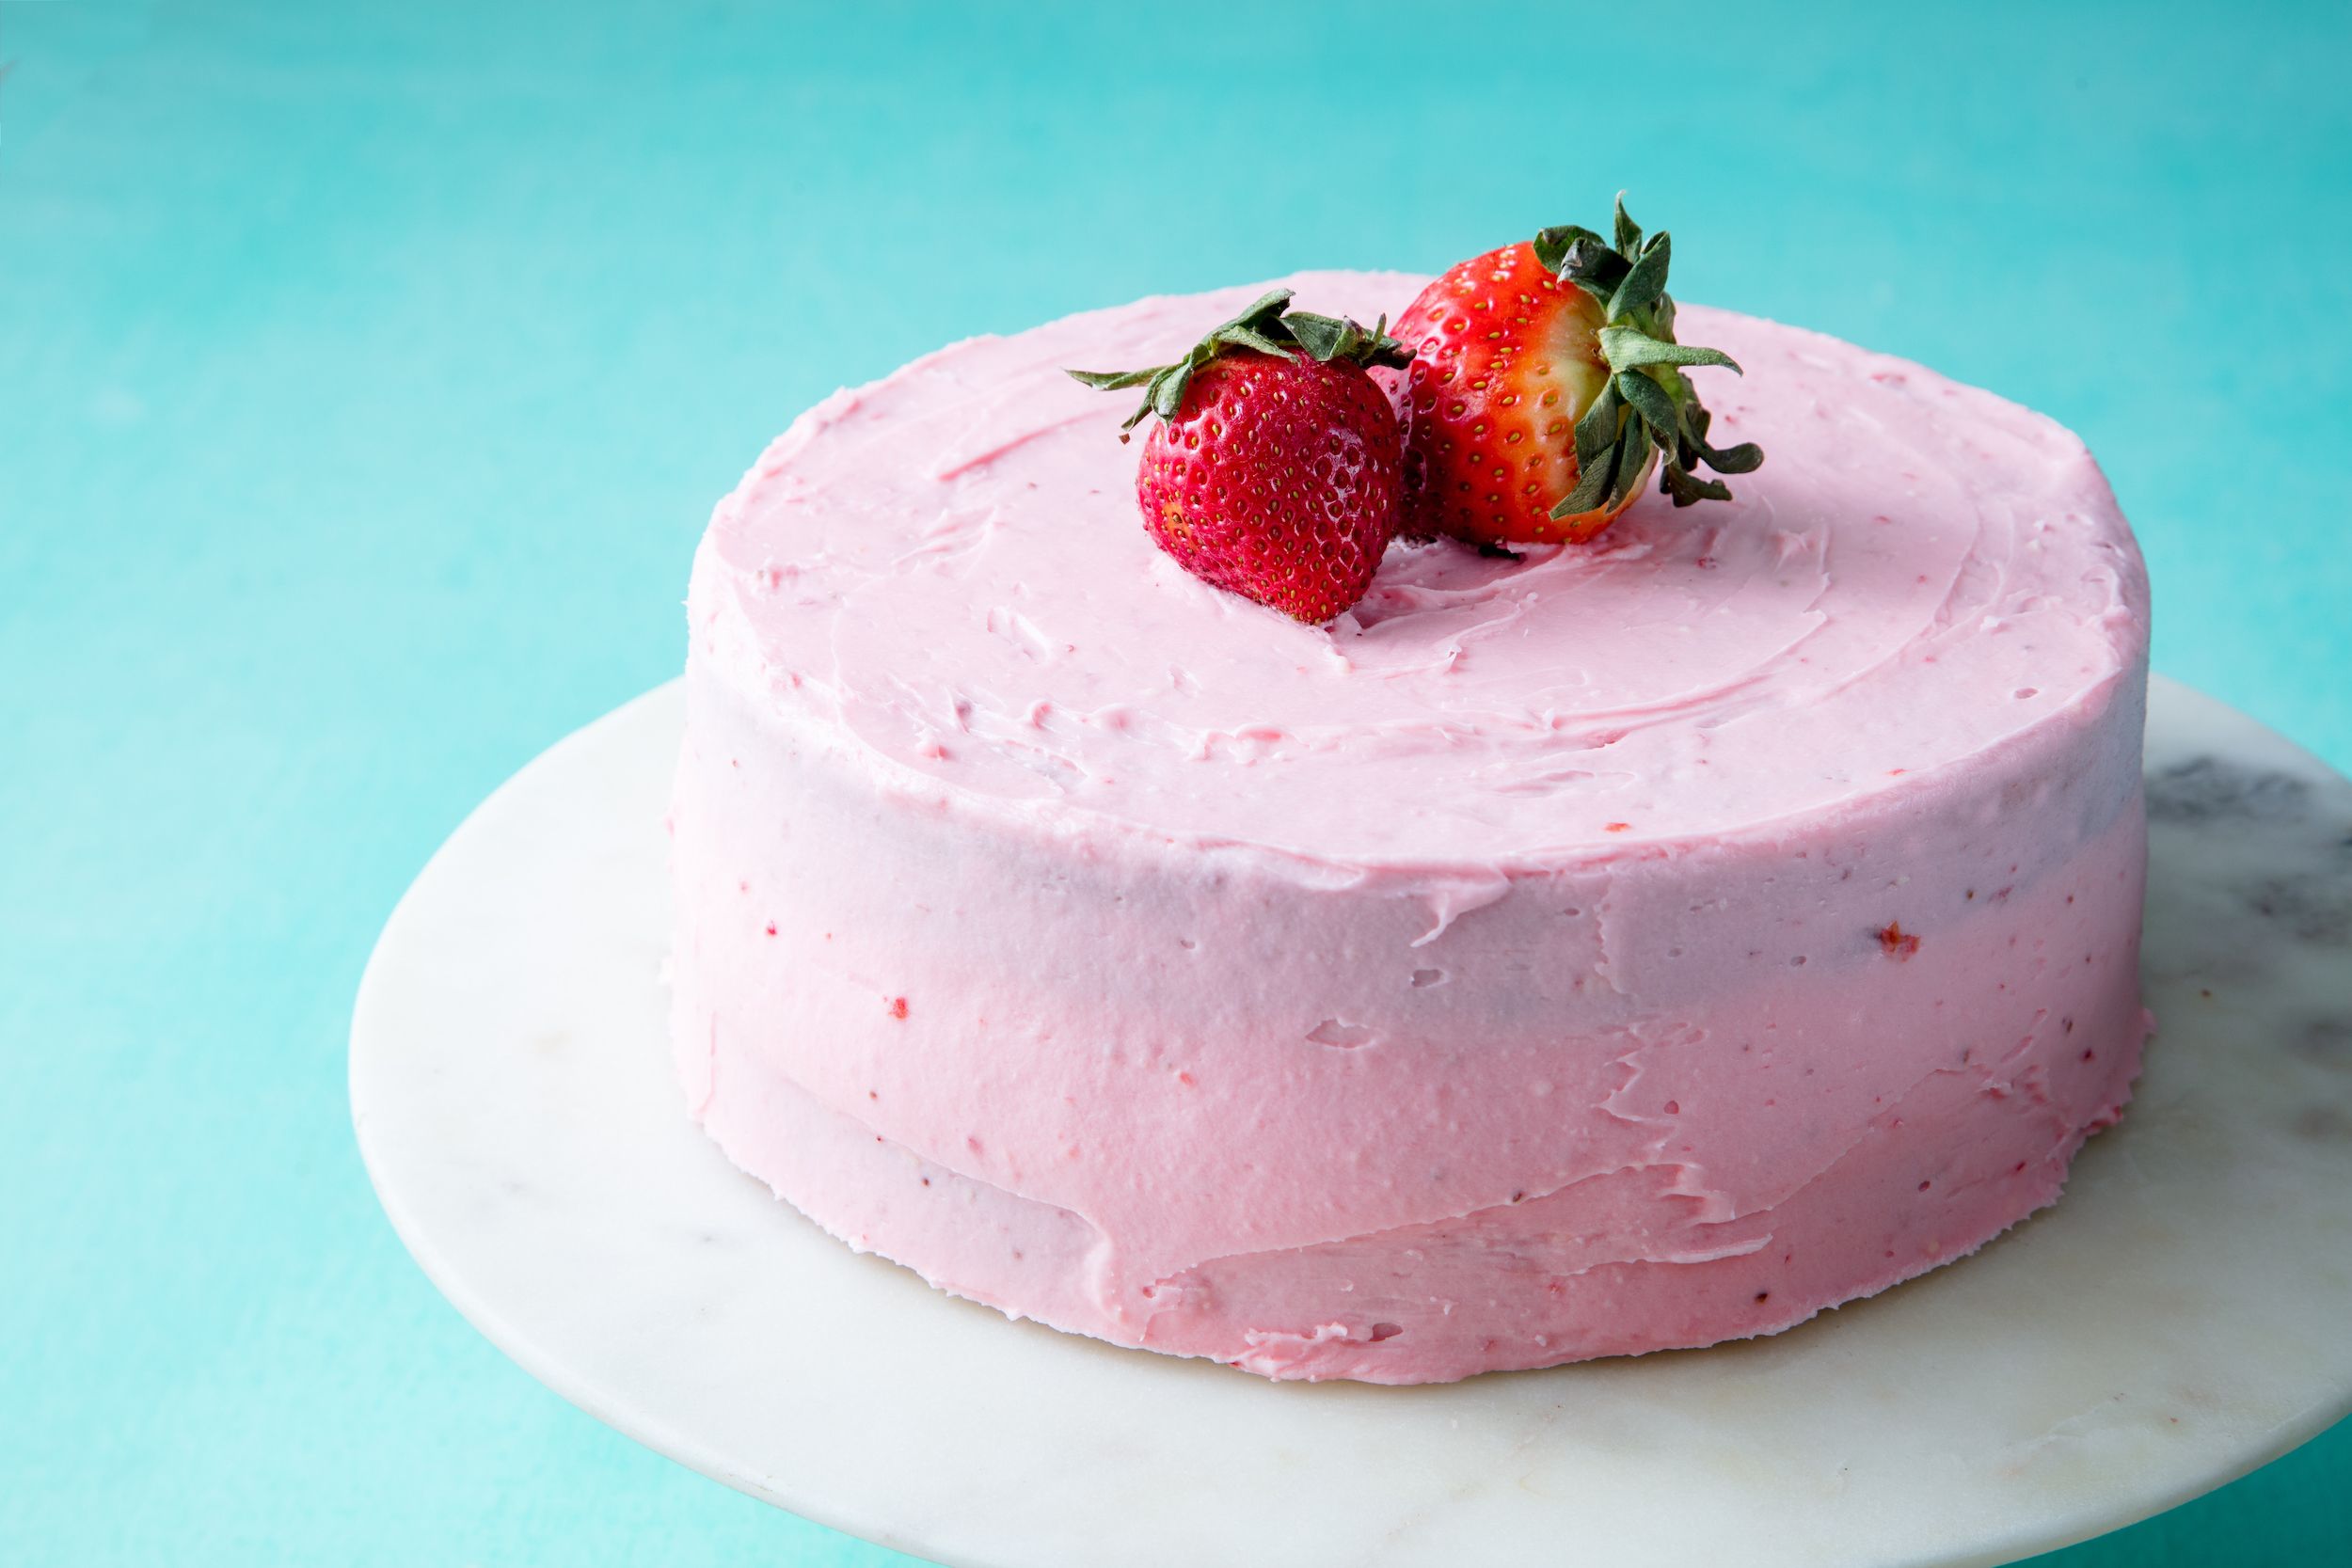 Strawberry Cake Recipe: How to Make It